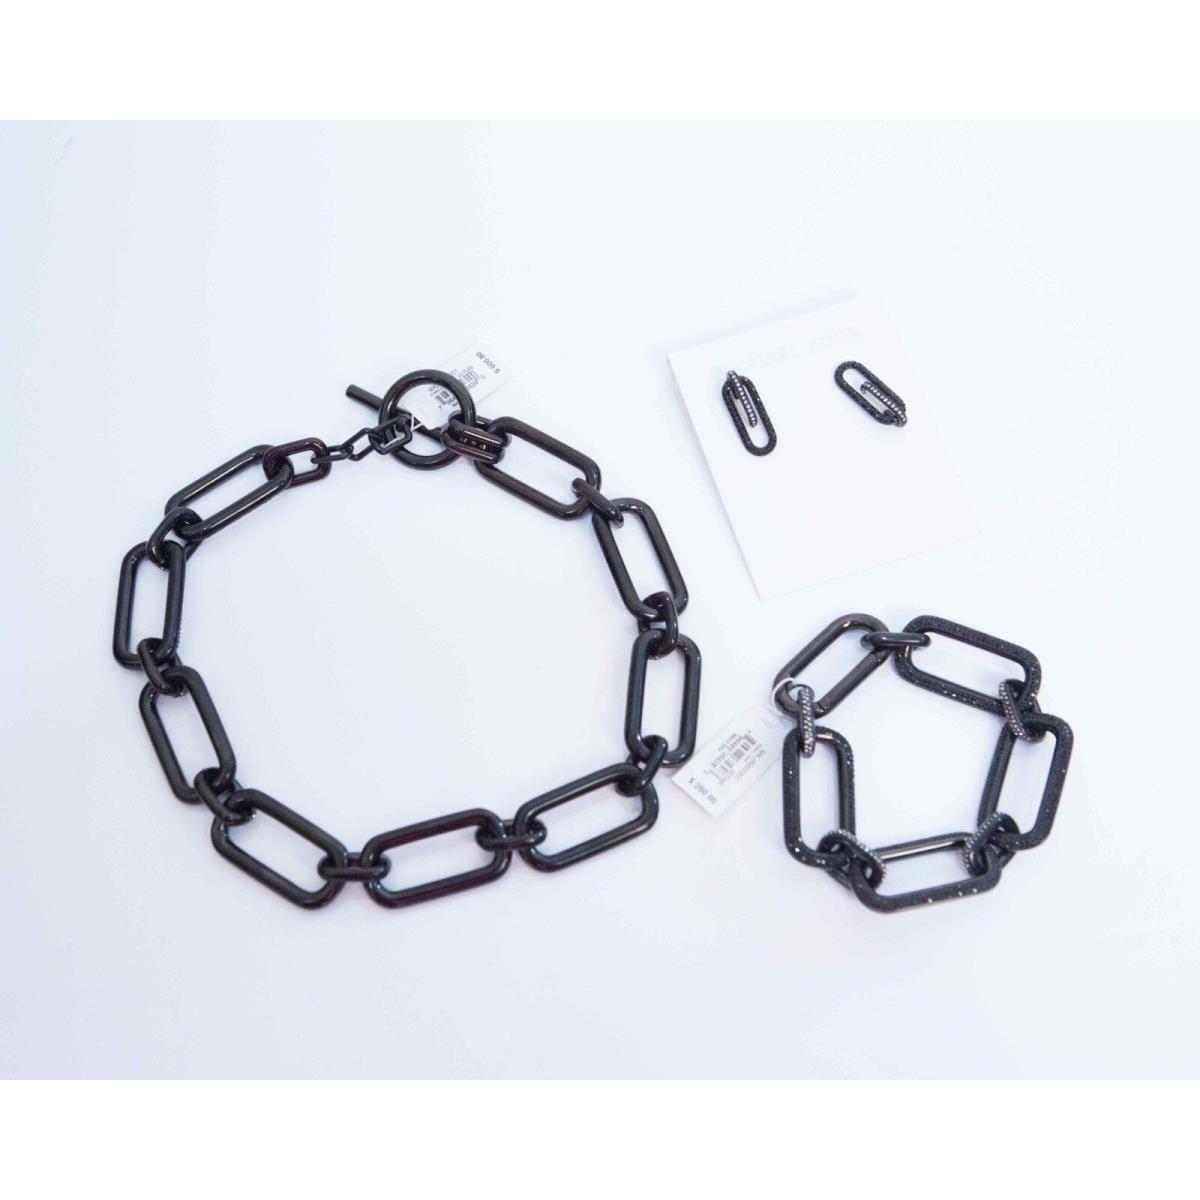 Michael Kors Iconic Links Pave Crystal Black Necklace Bracelet Earrings